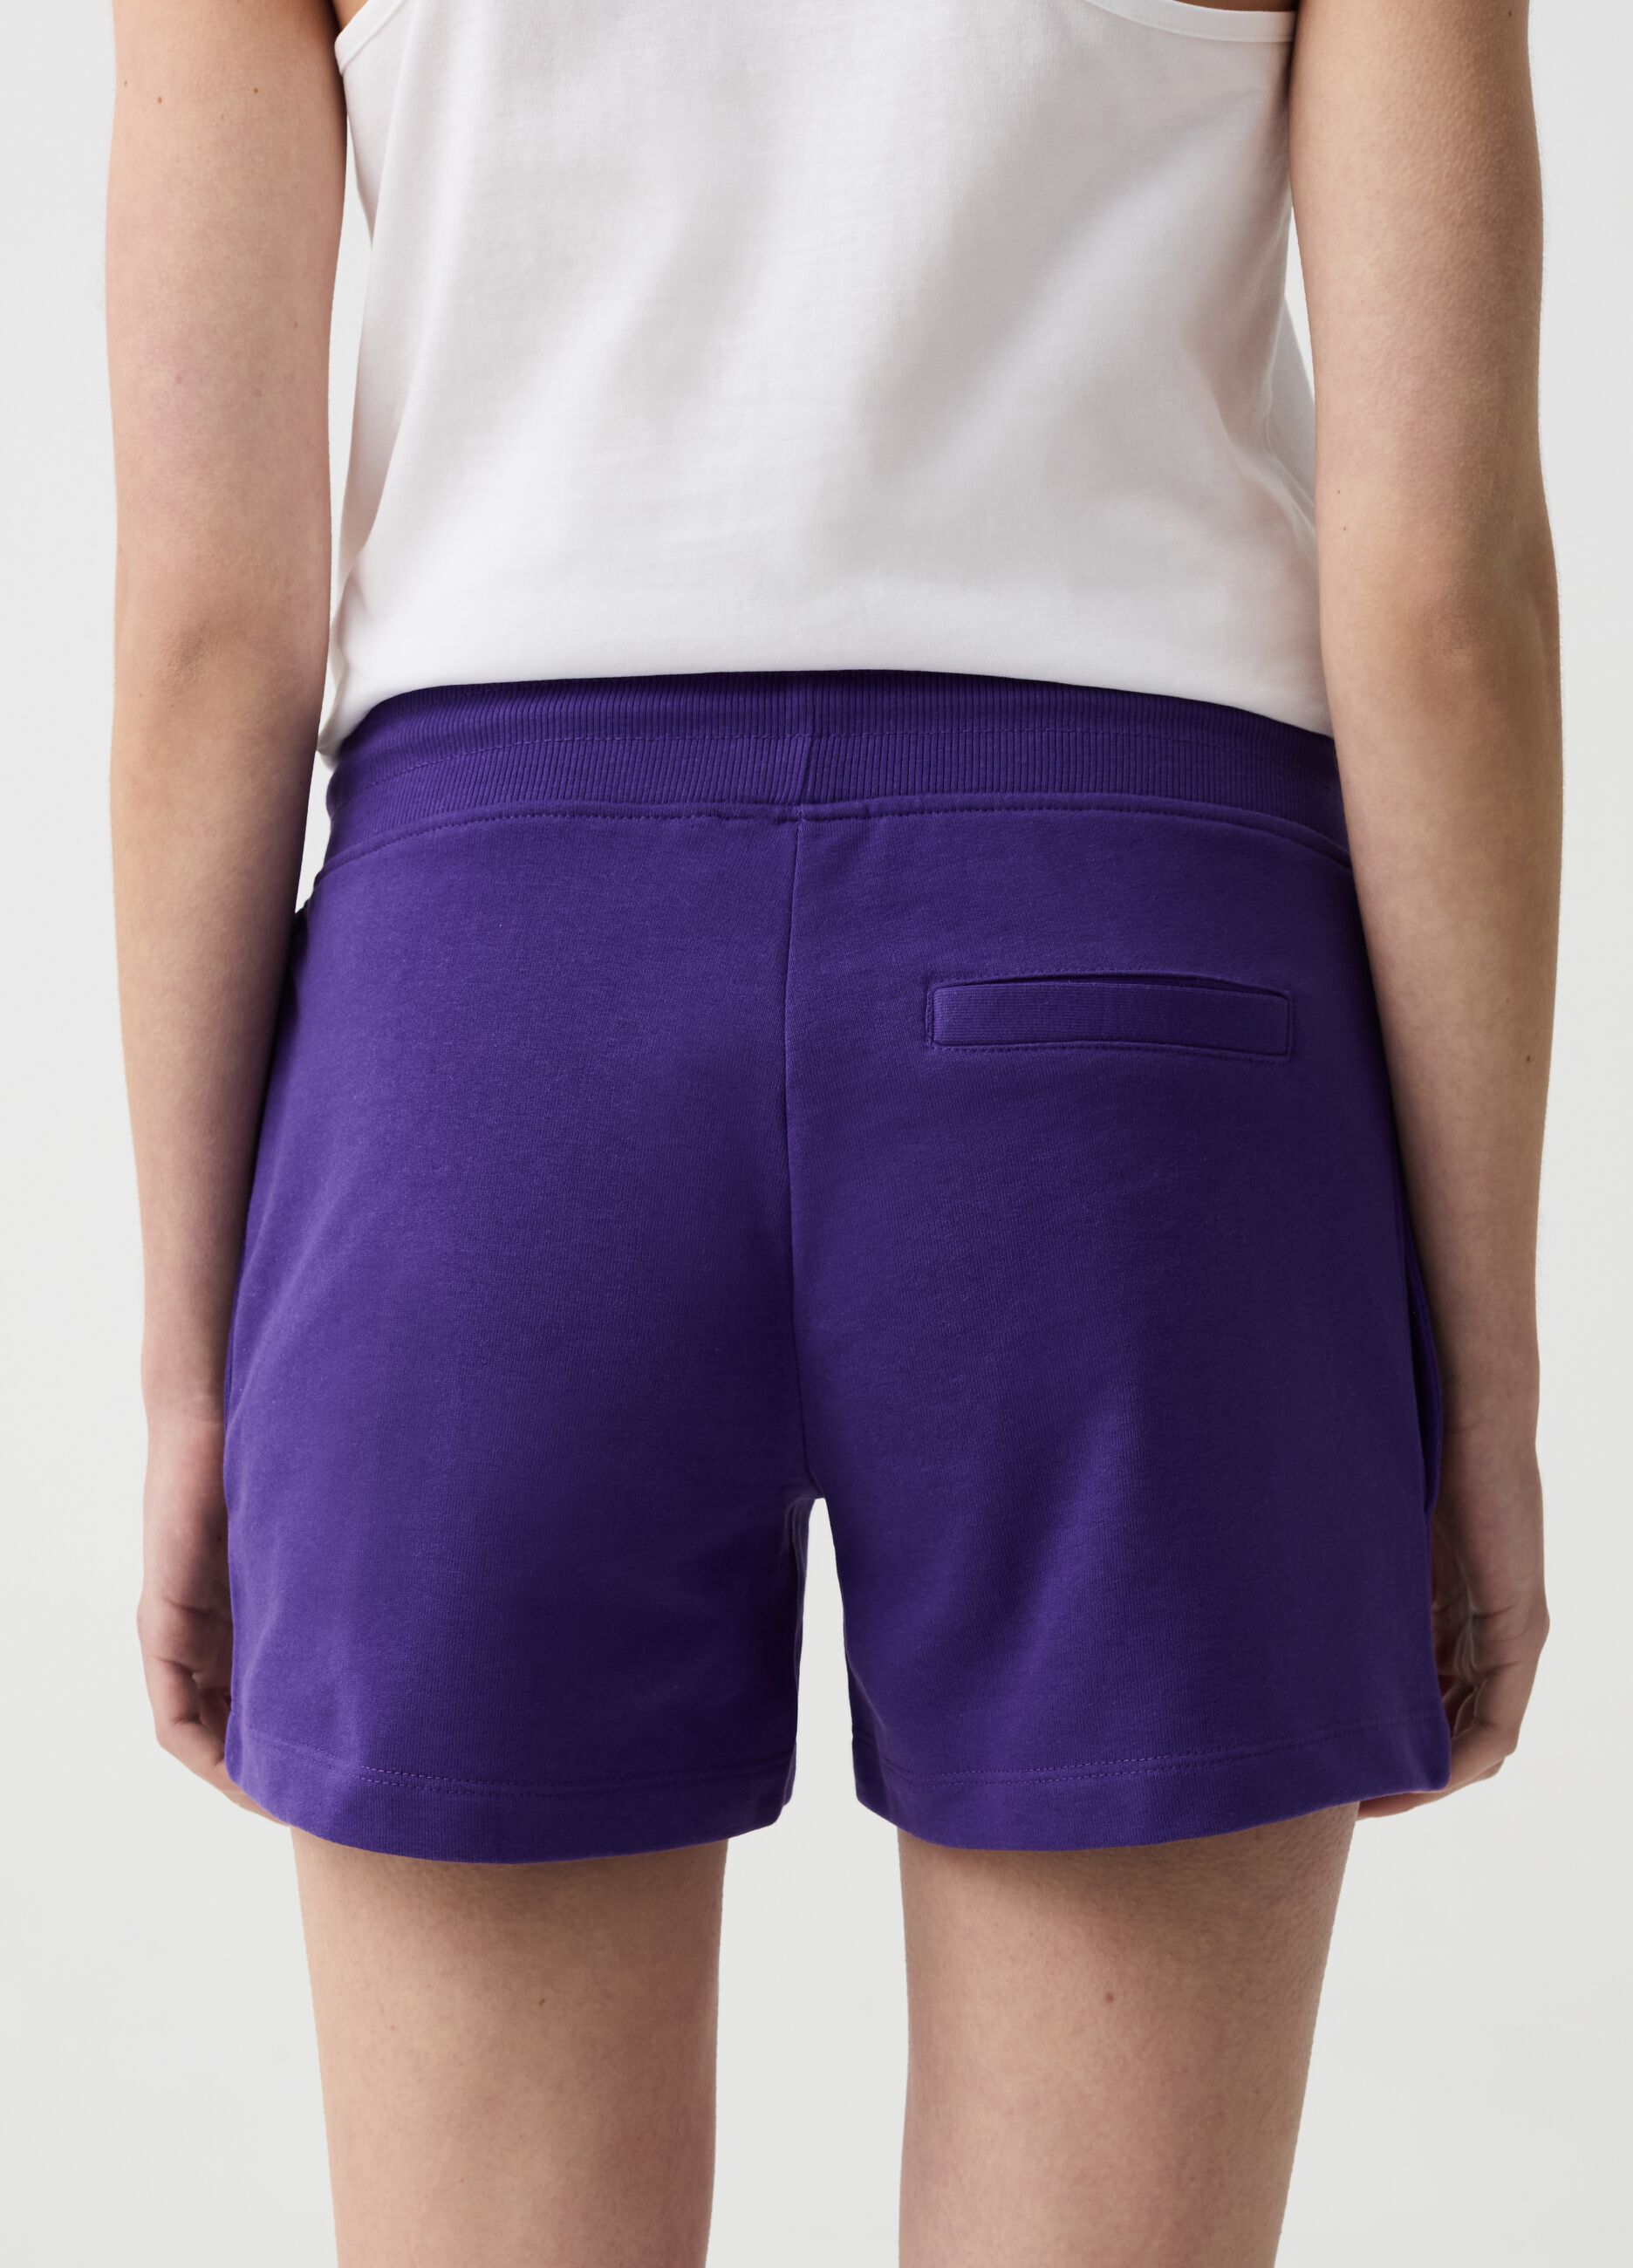 Shorts with NBA Los Angeles Lakers print